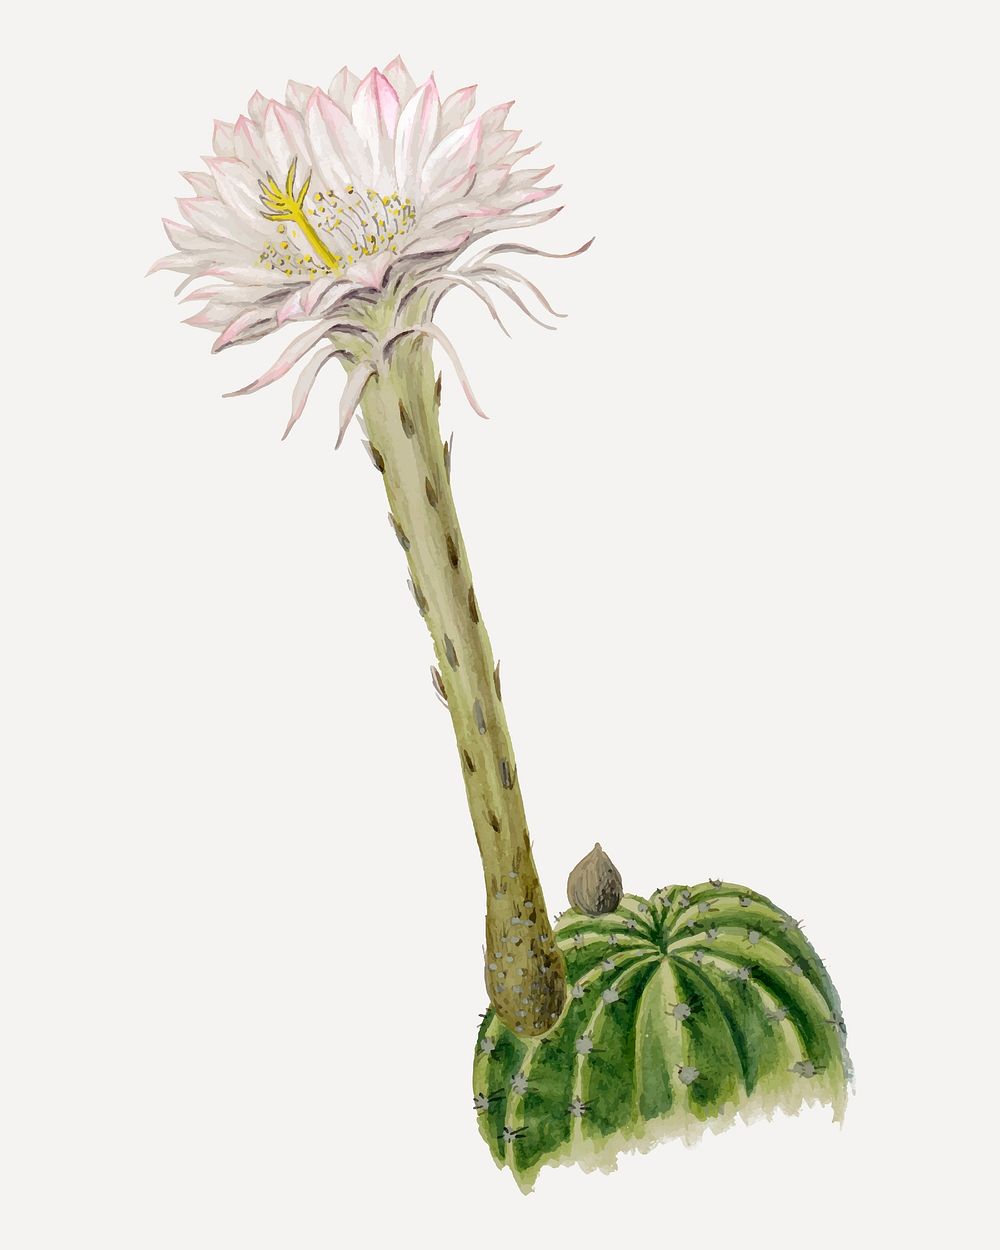 Flower sticker, aesthetic vintage white Hedgehog cactus illustration, classic design element vector